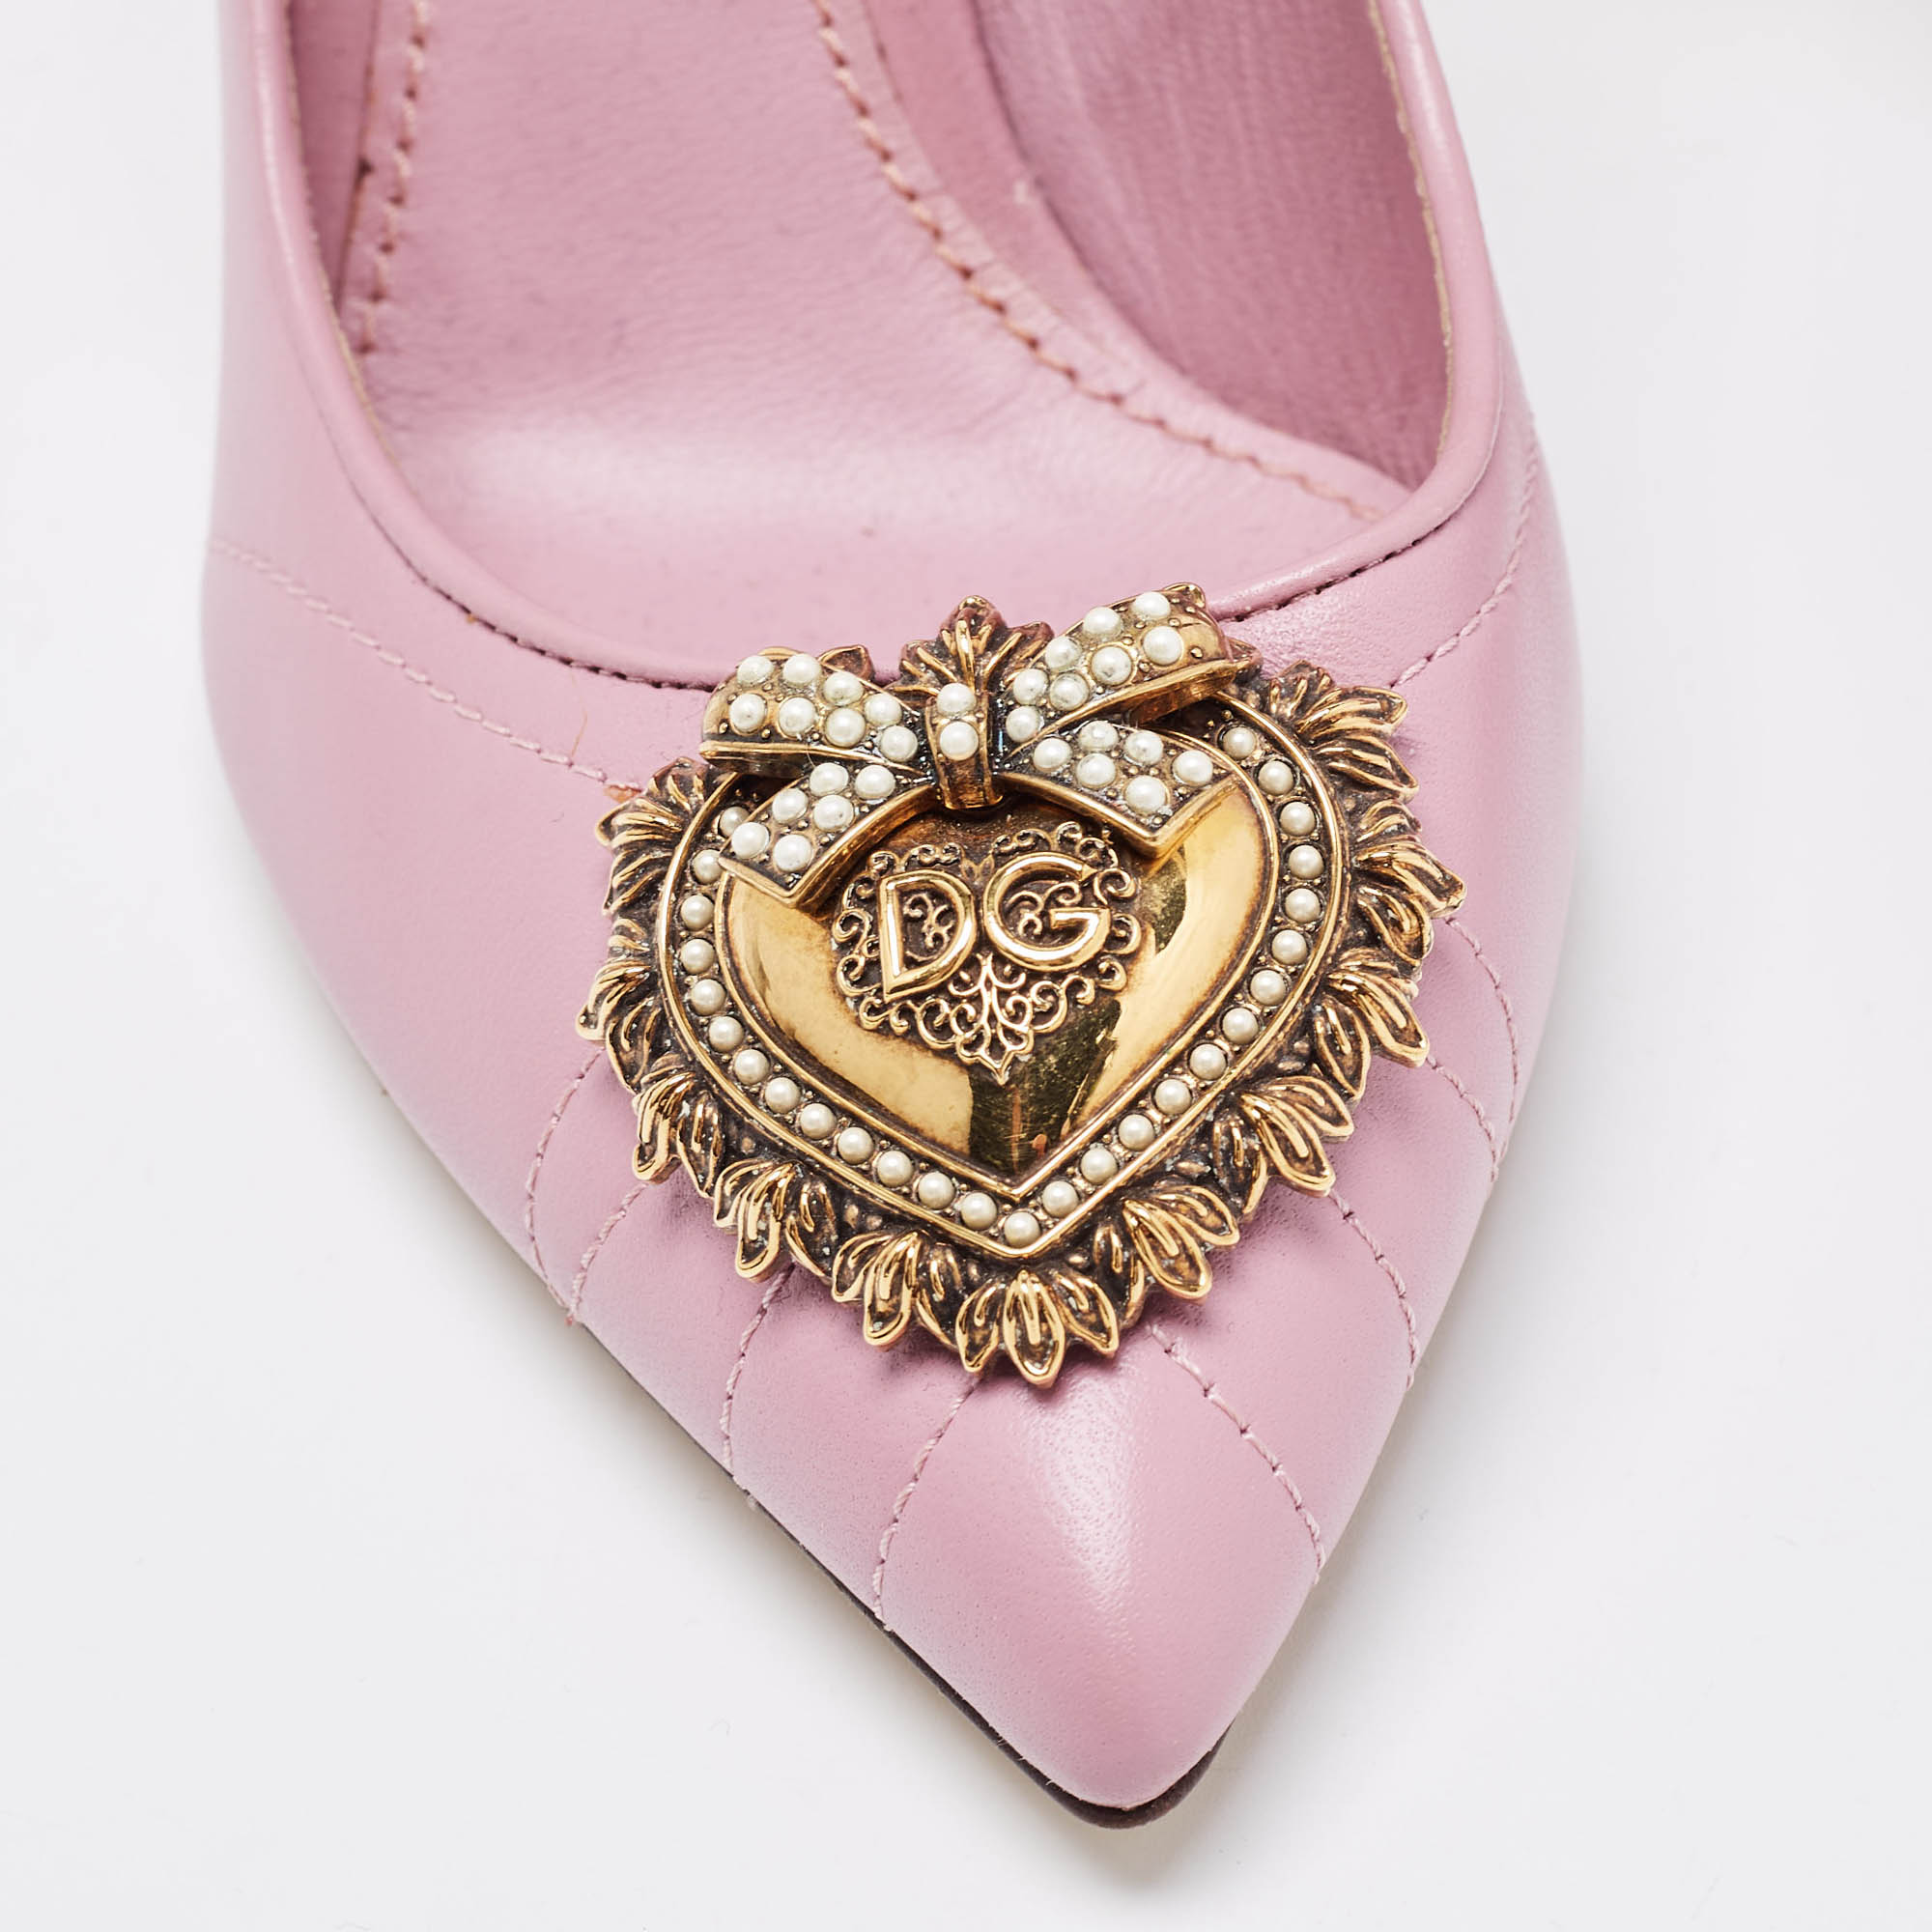 Dolce & Gabbana Pink Leather Devotion Pumps Size 37